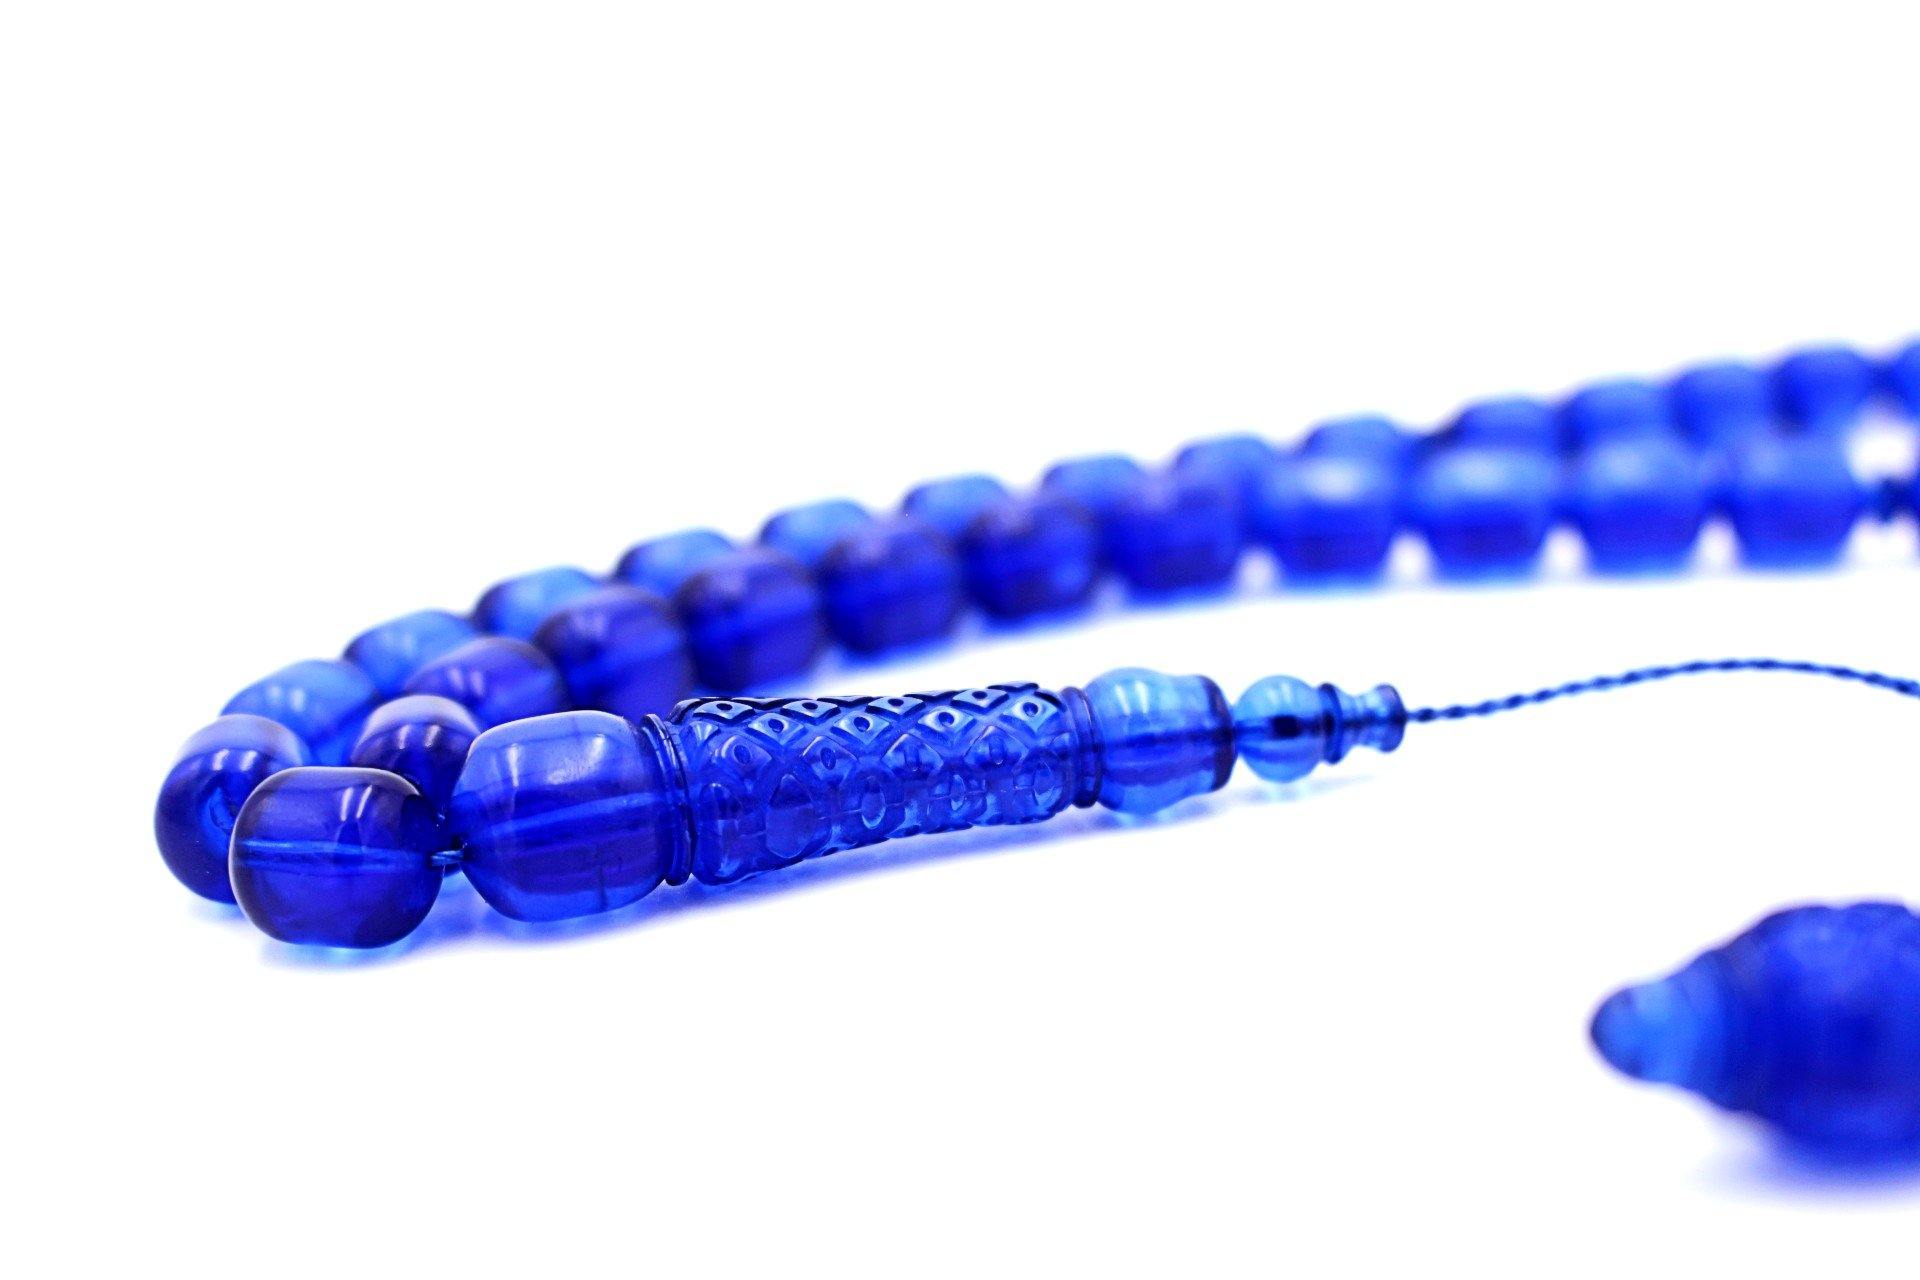 prayer beads gemstones amber mala meditation